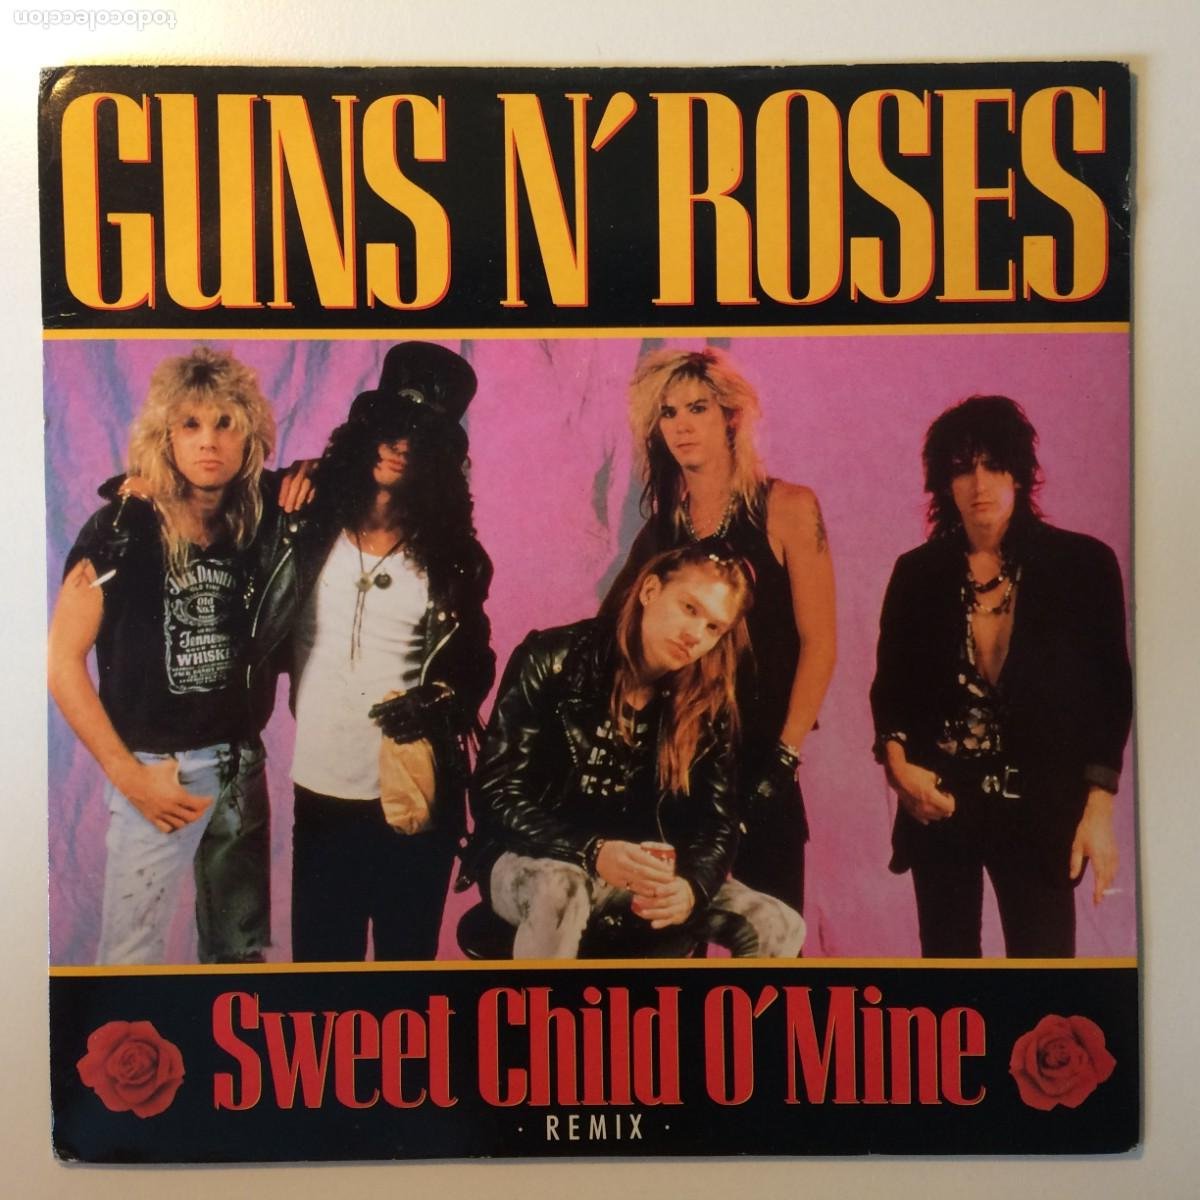 Guns N' Roses. TOP 5 Songs - Página 2 370276491